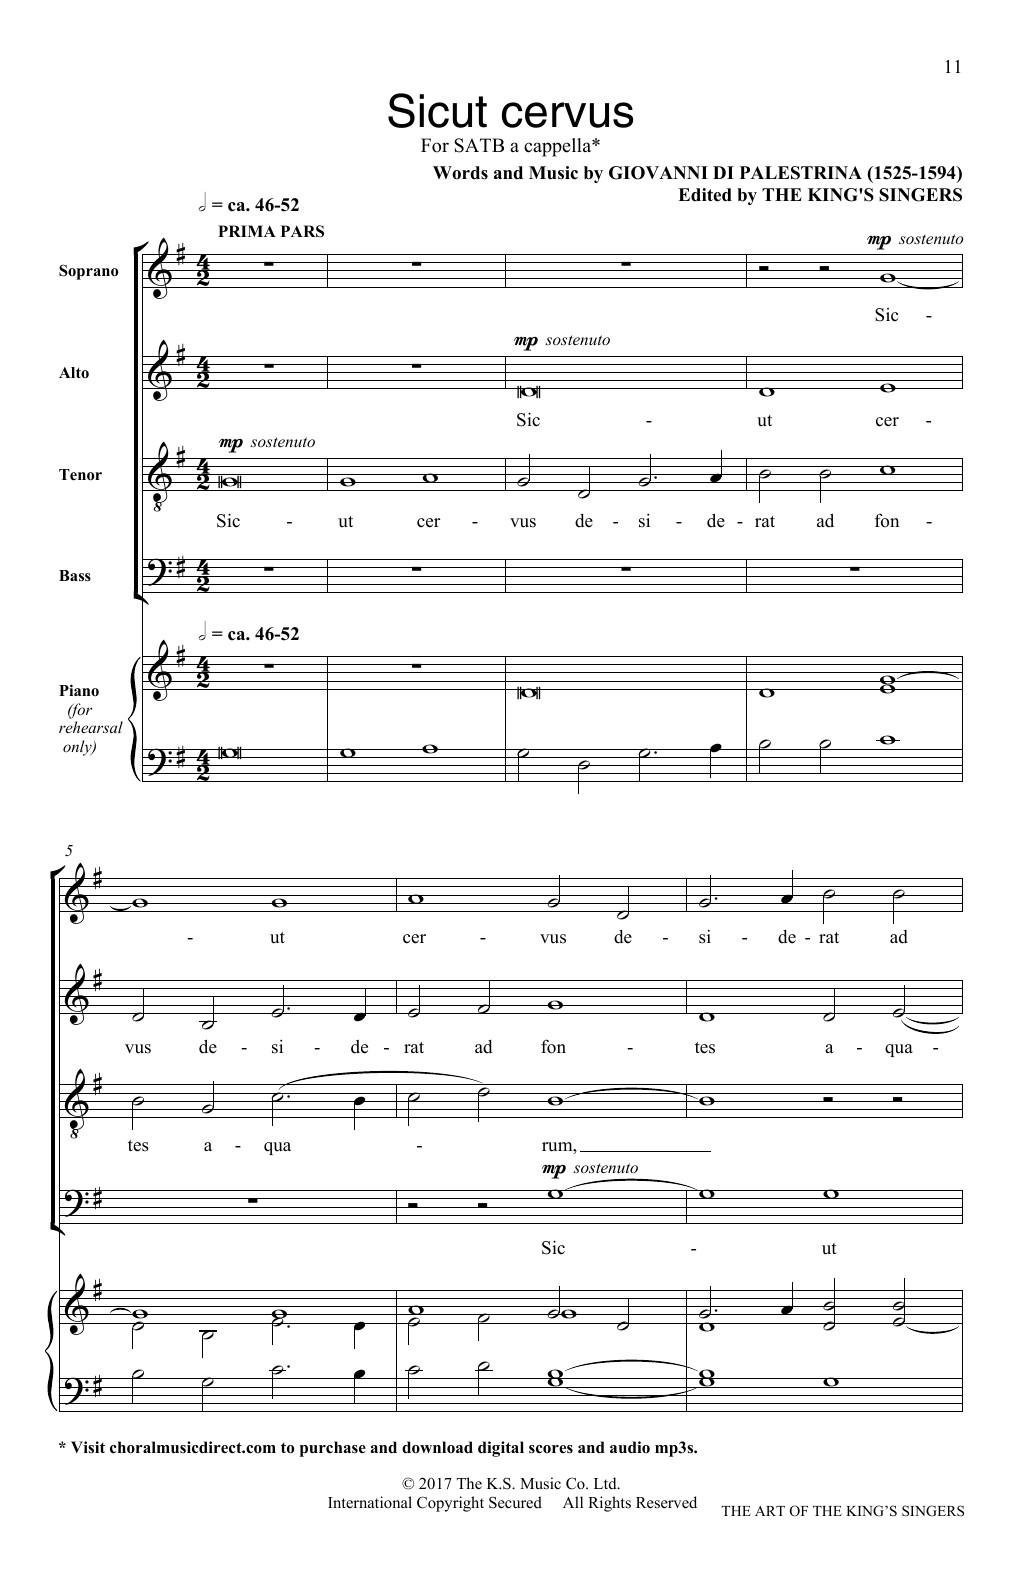 Giovanni Palestrina Sicut Cervus Sheet Music Notes & Chords for SATB - Download or Print PDF